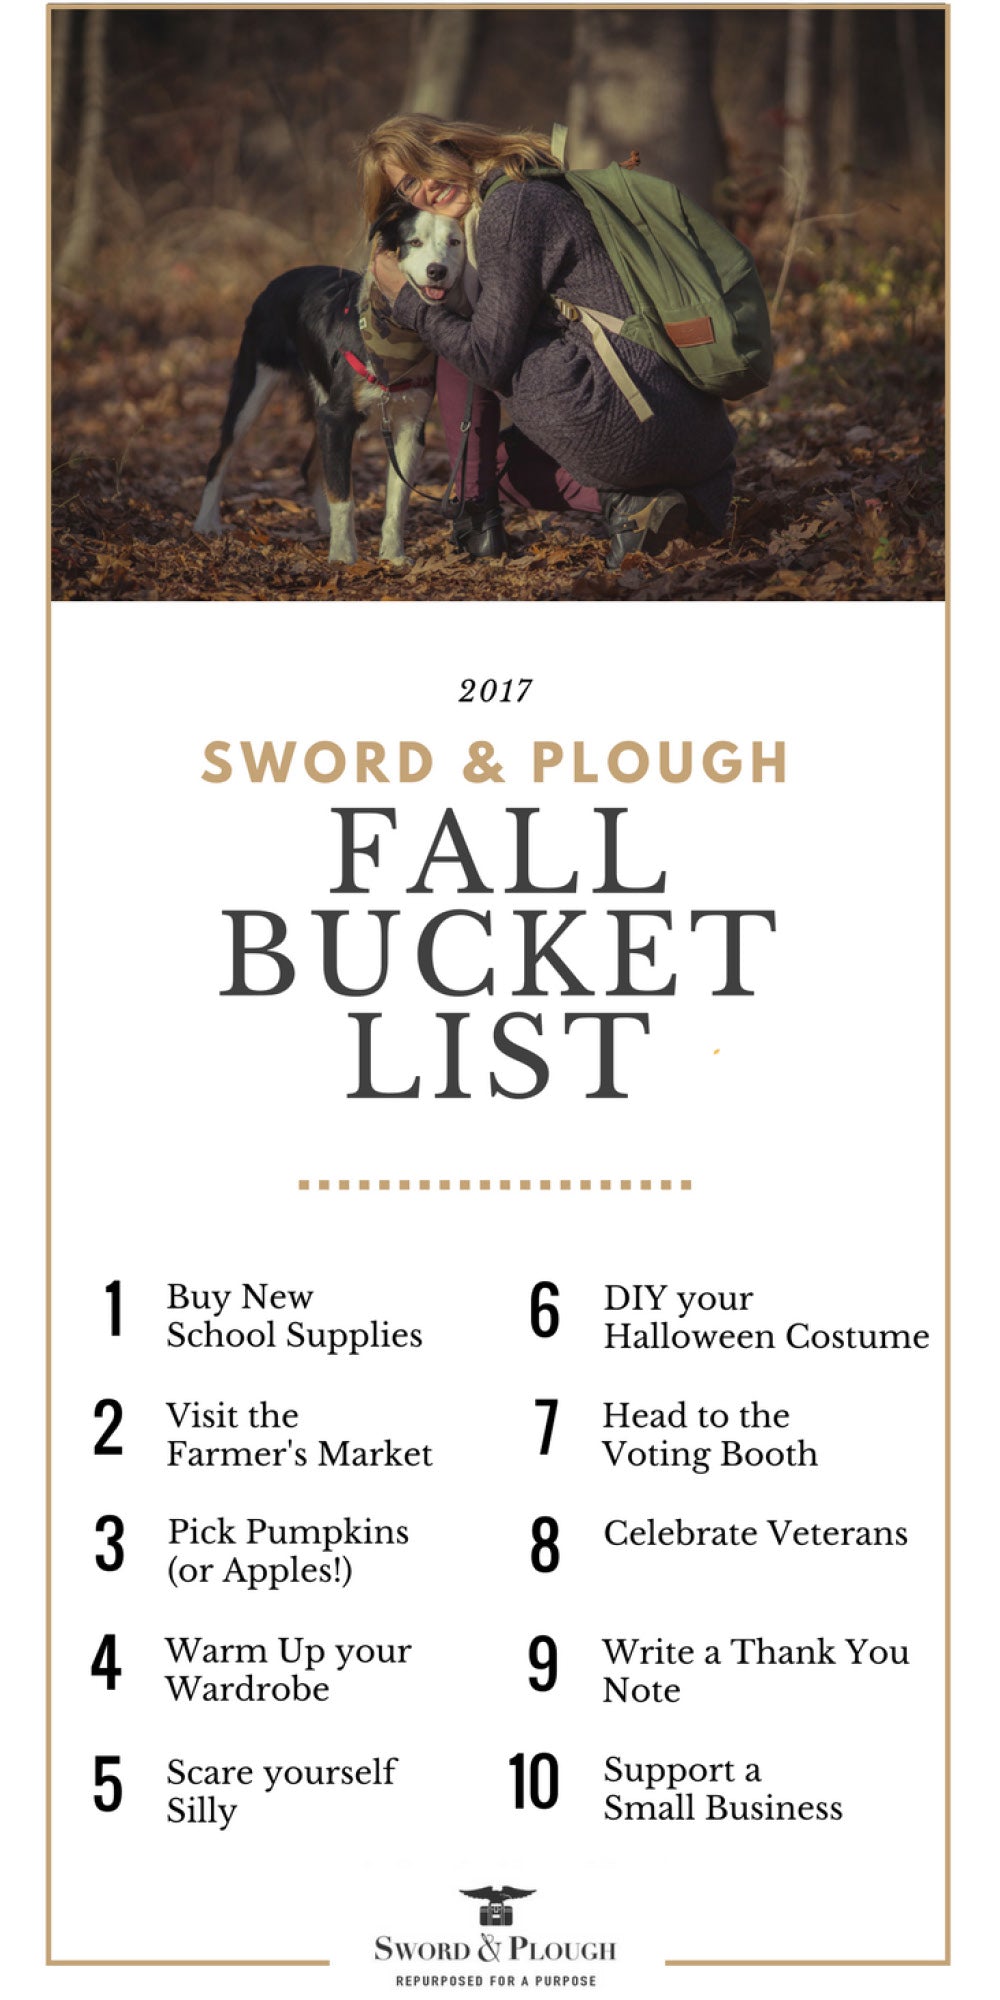 Fall Bucket list